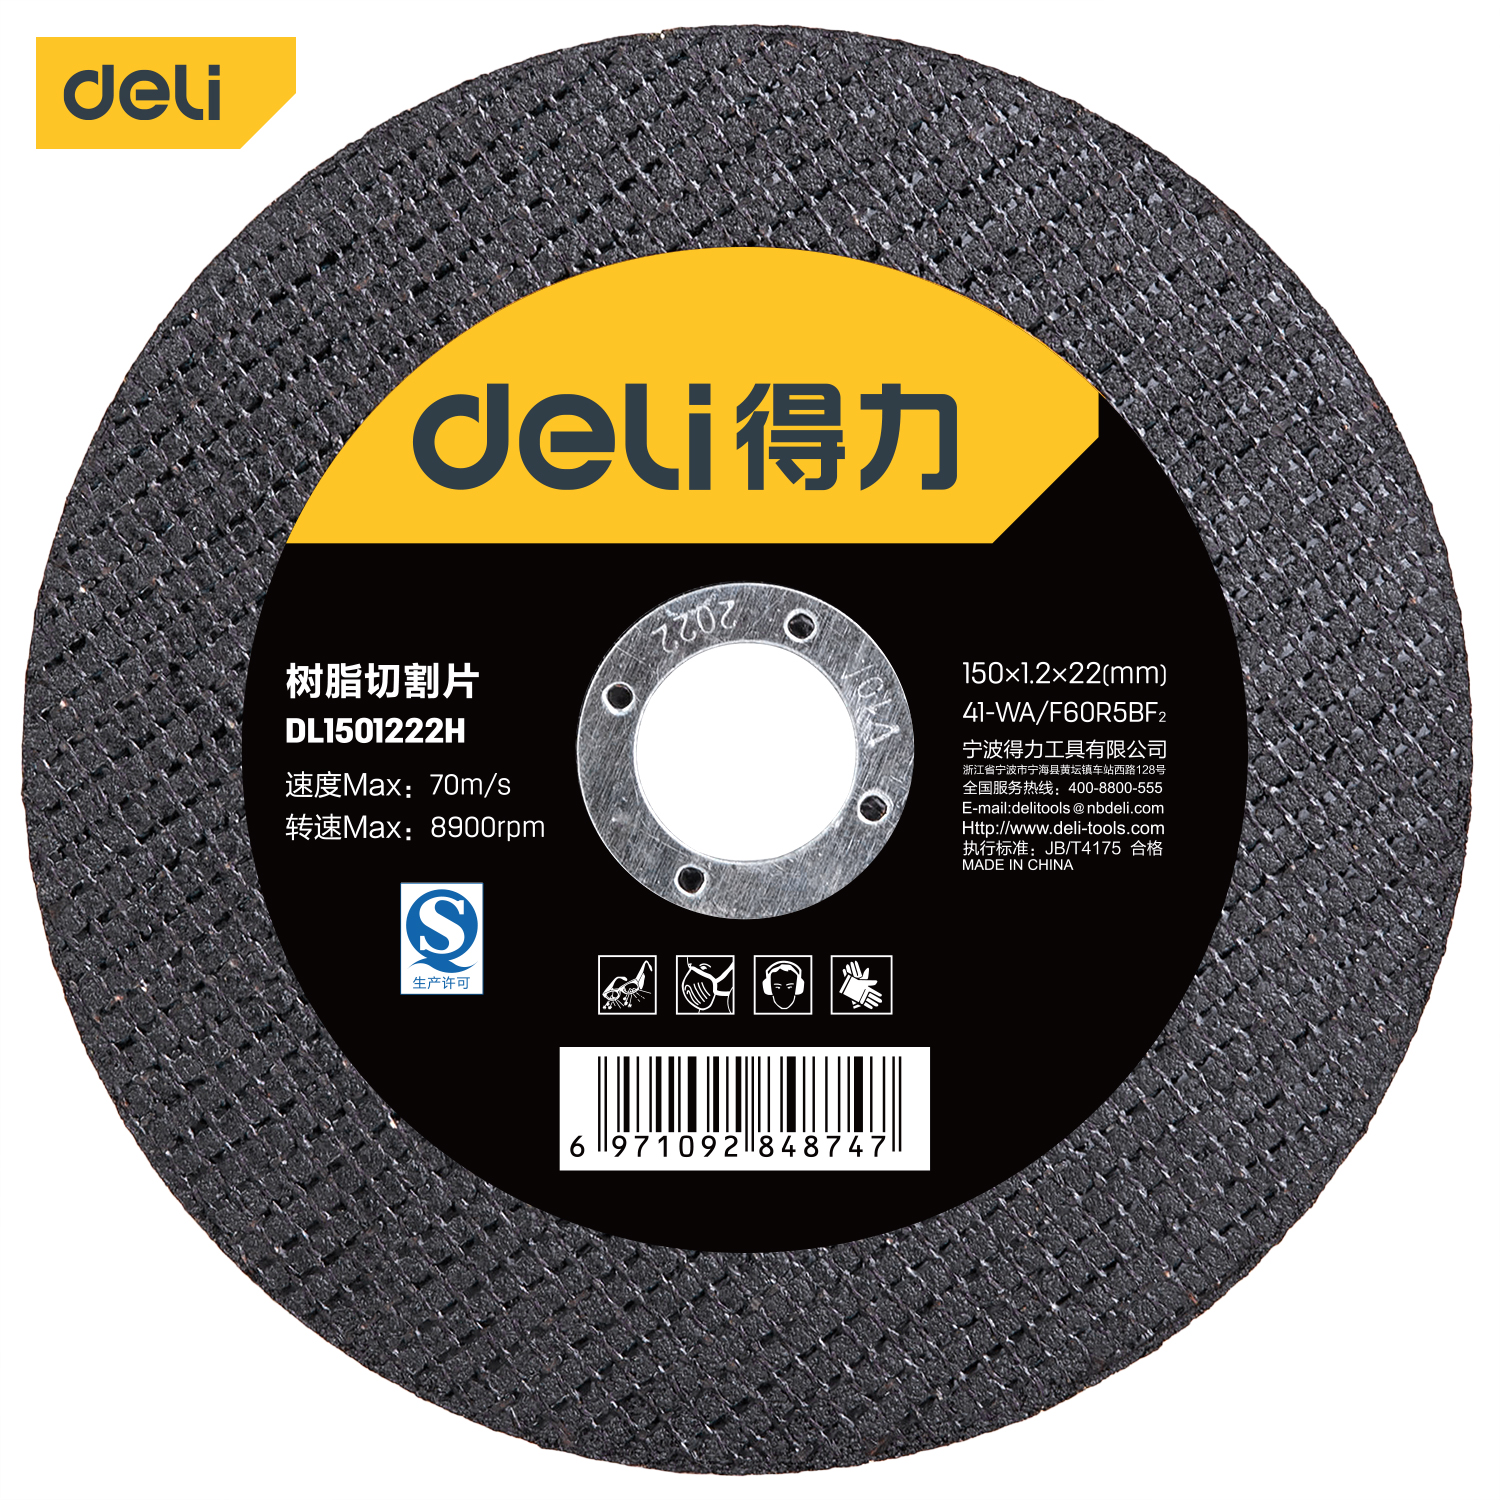 Deli-DL1501222HFlip Discs